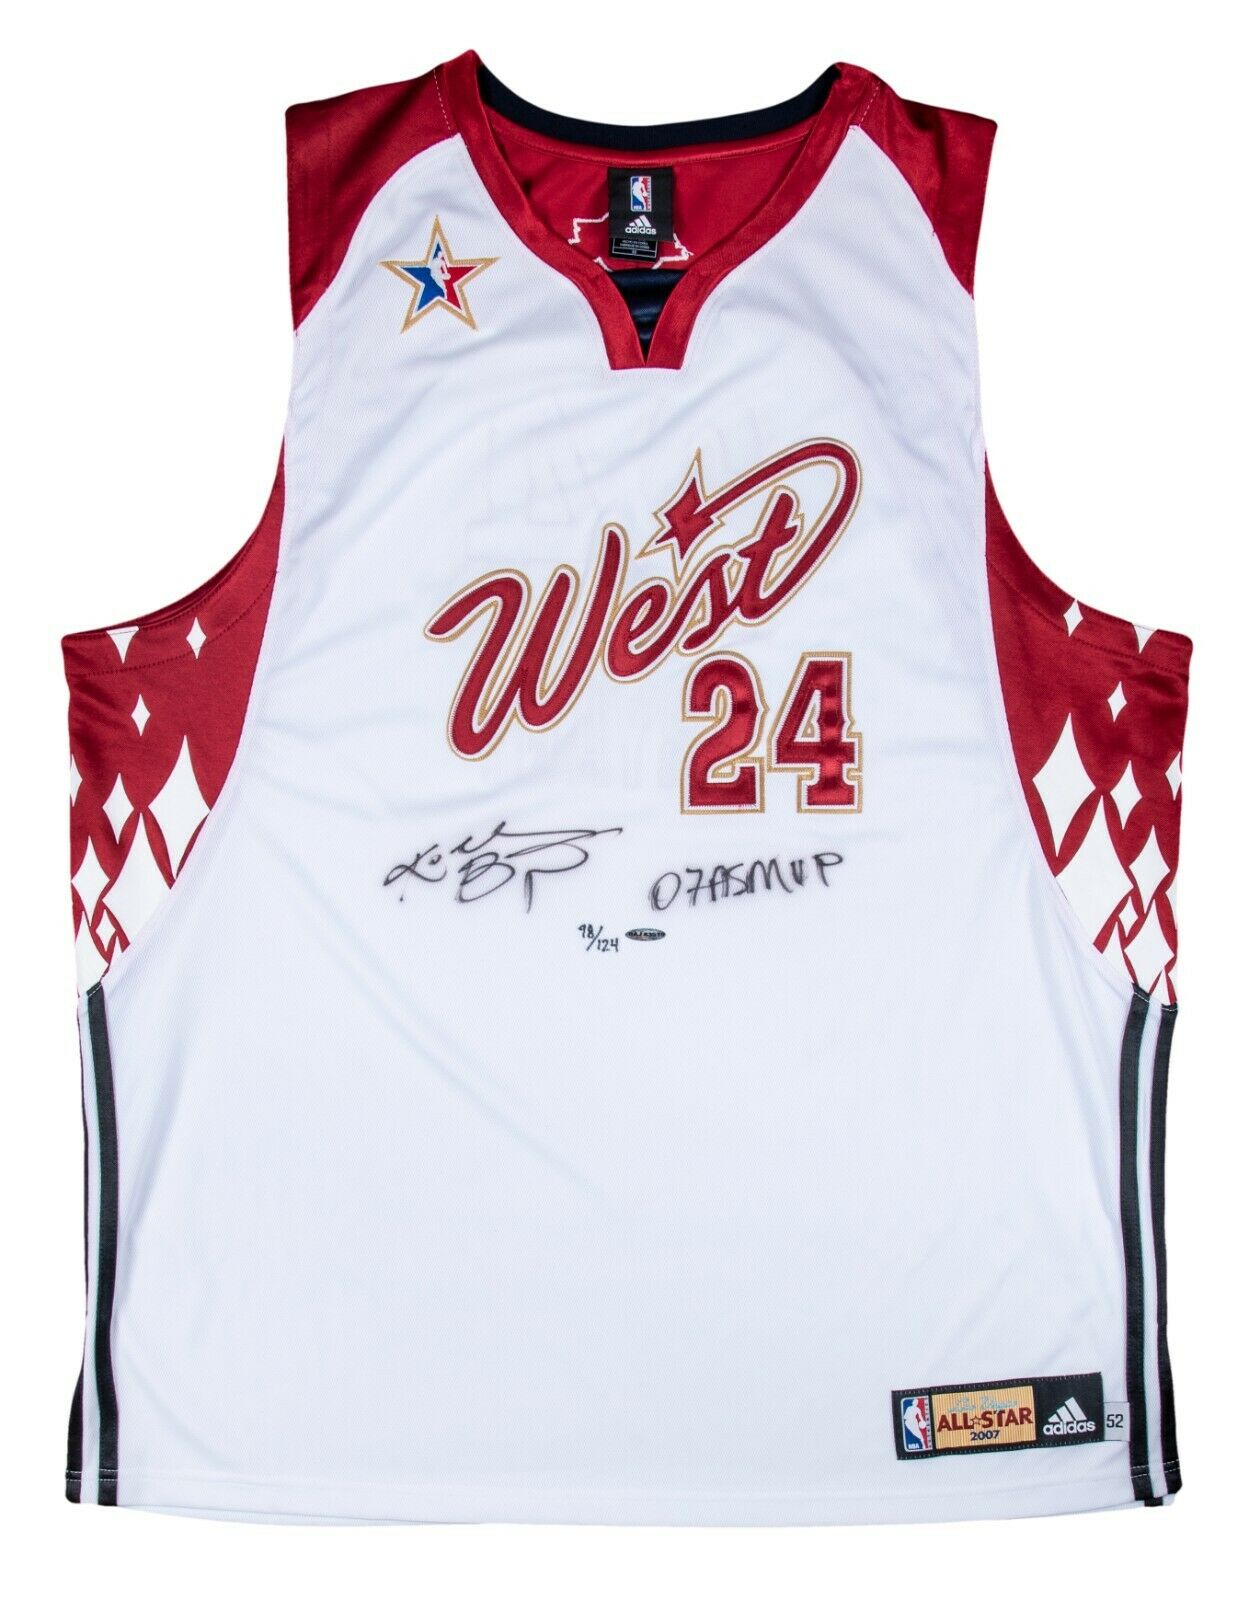 All-Star Game Kobe Bryant NBA Jerseys for sale